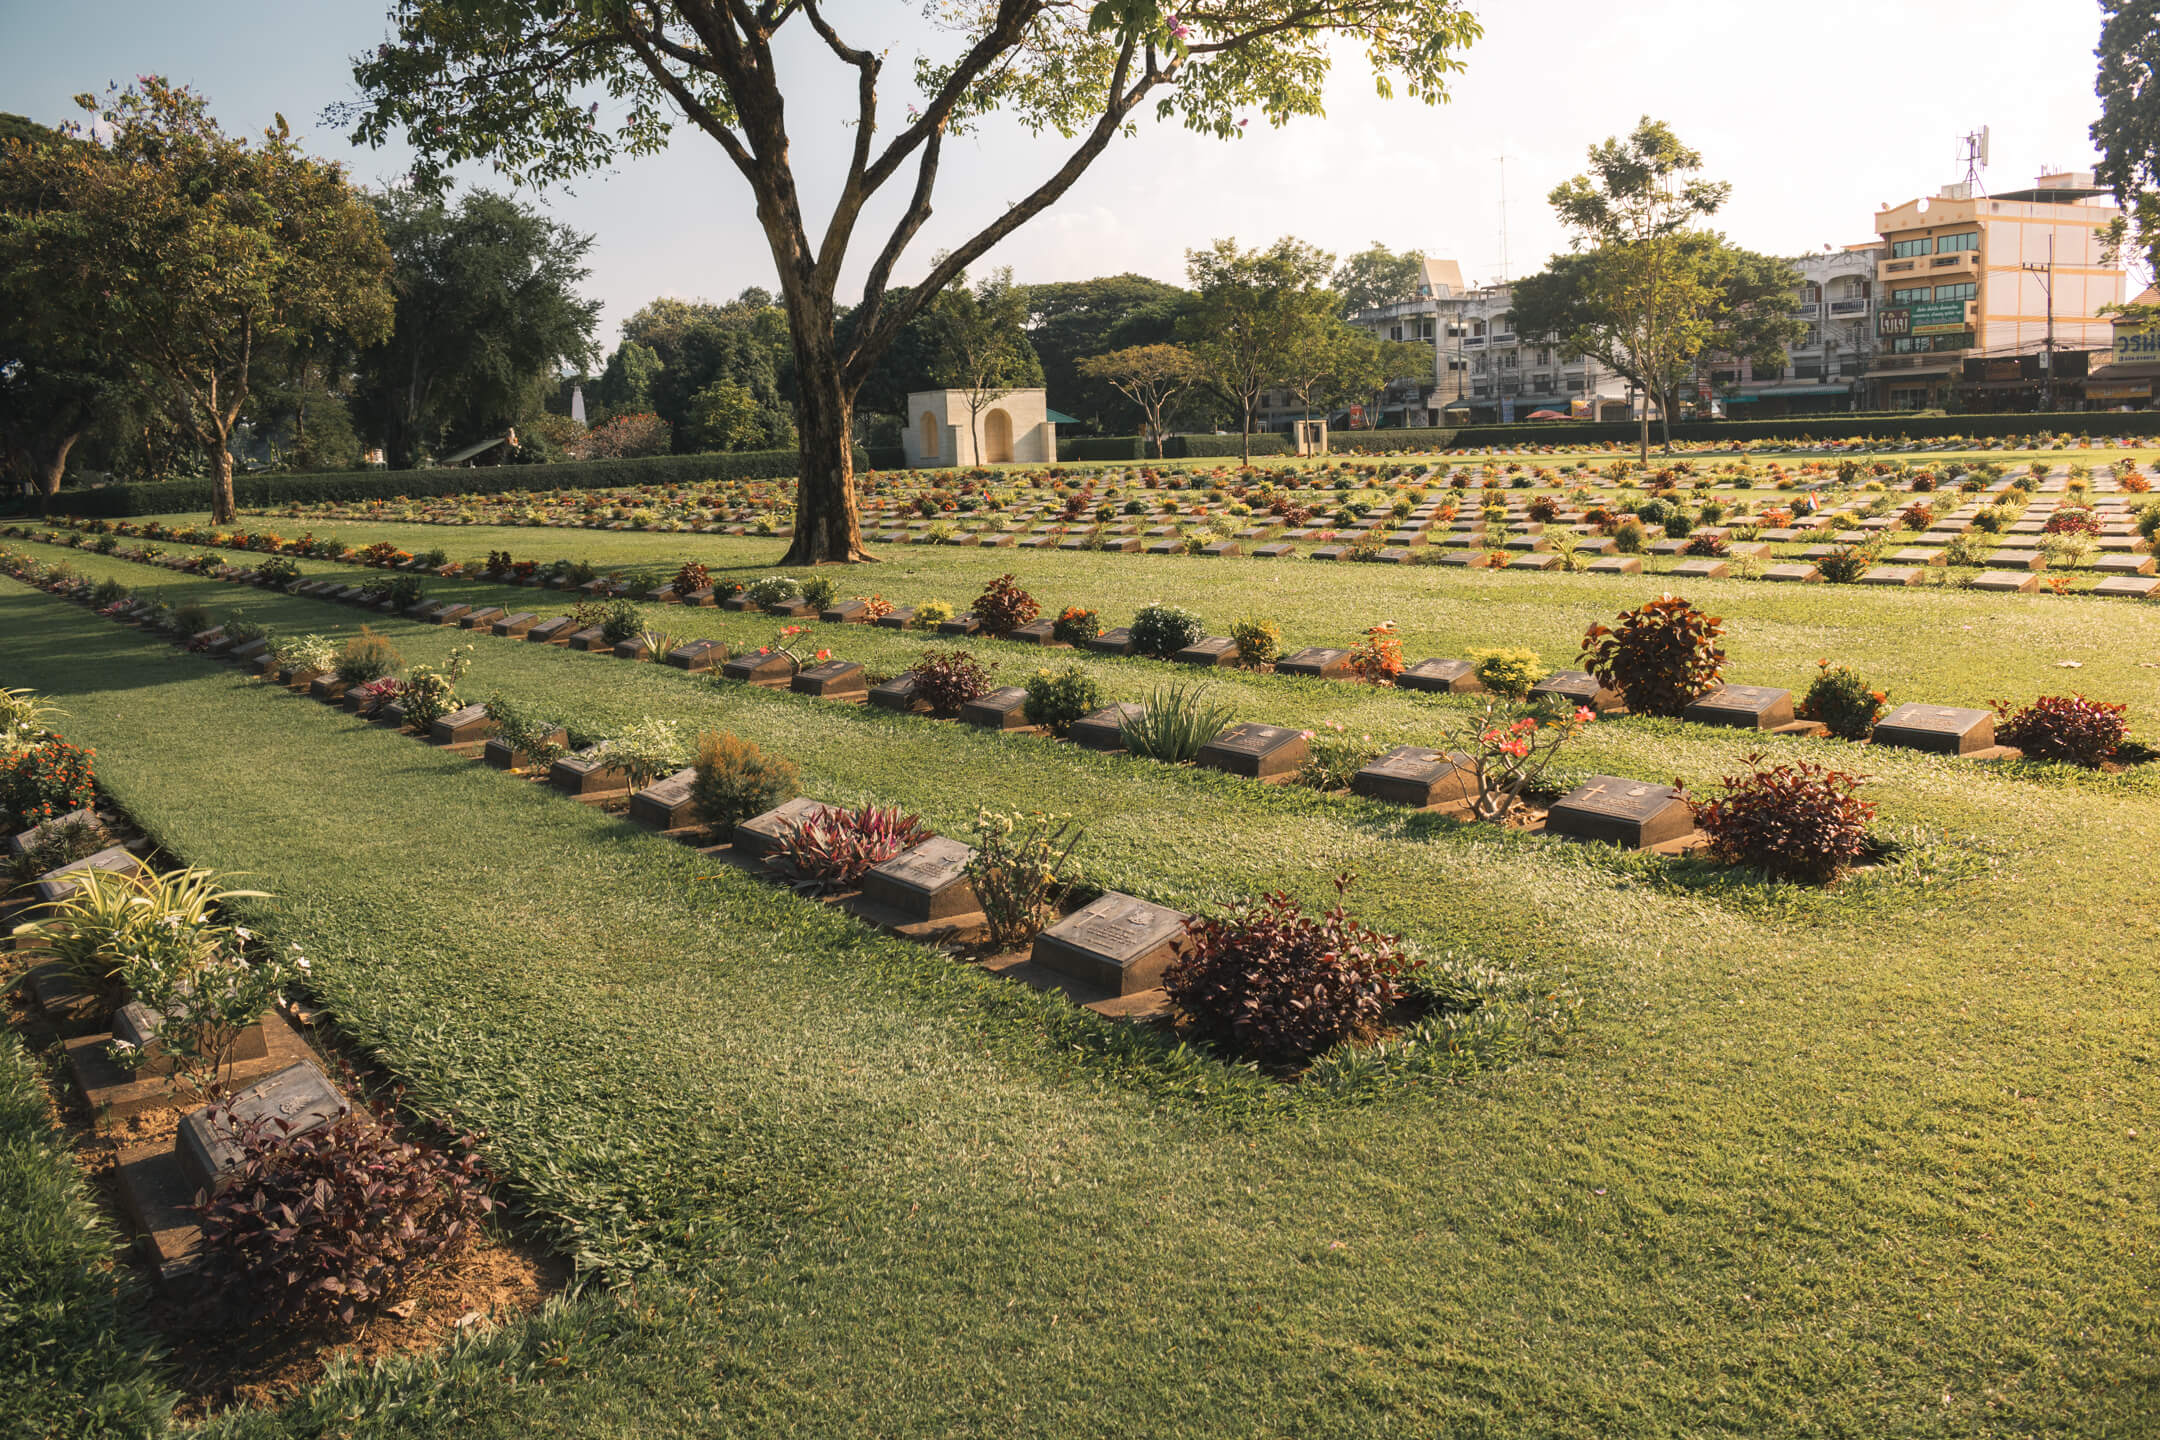 War cemetery and memorial in Kanchanaburi, Thailand